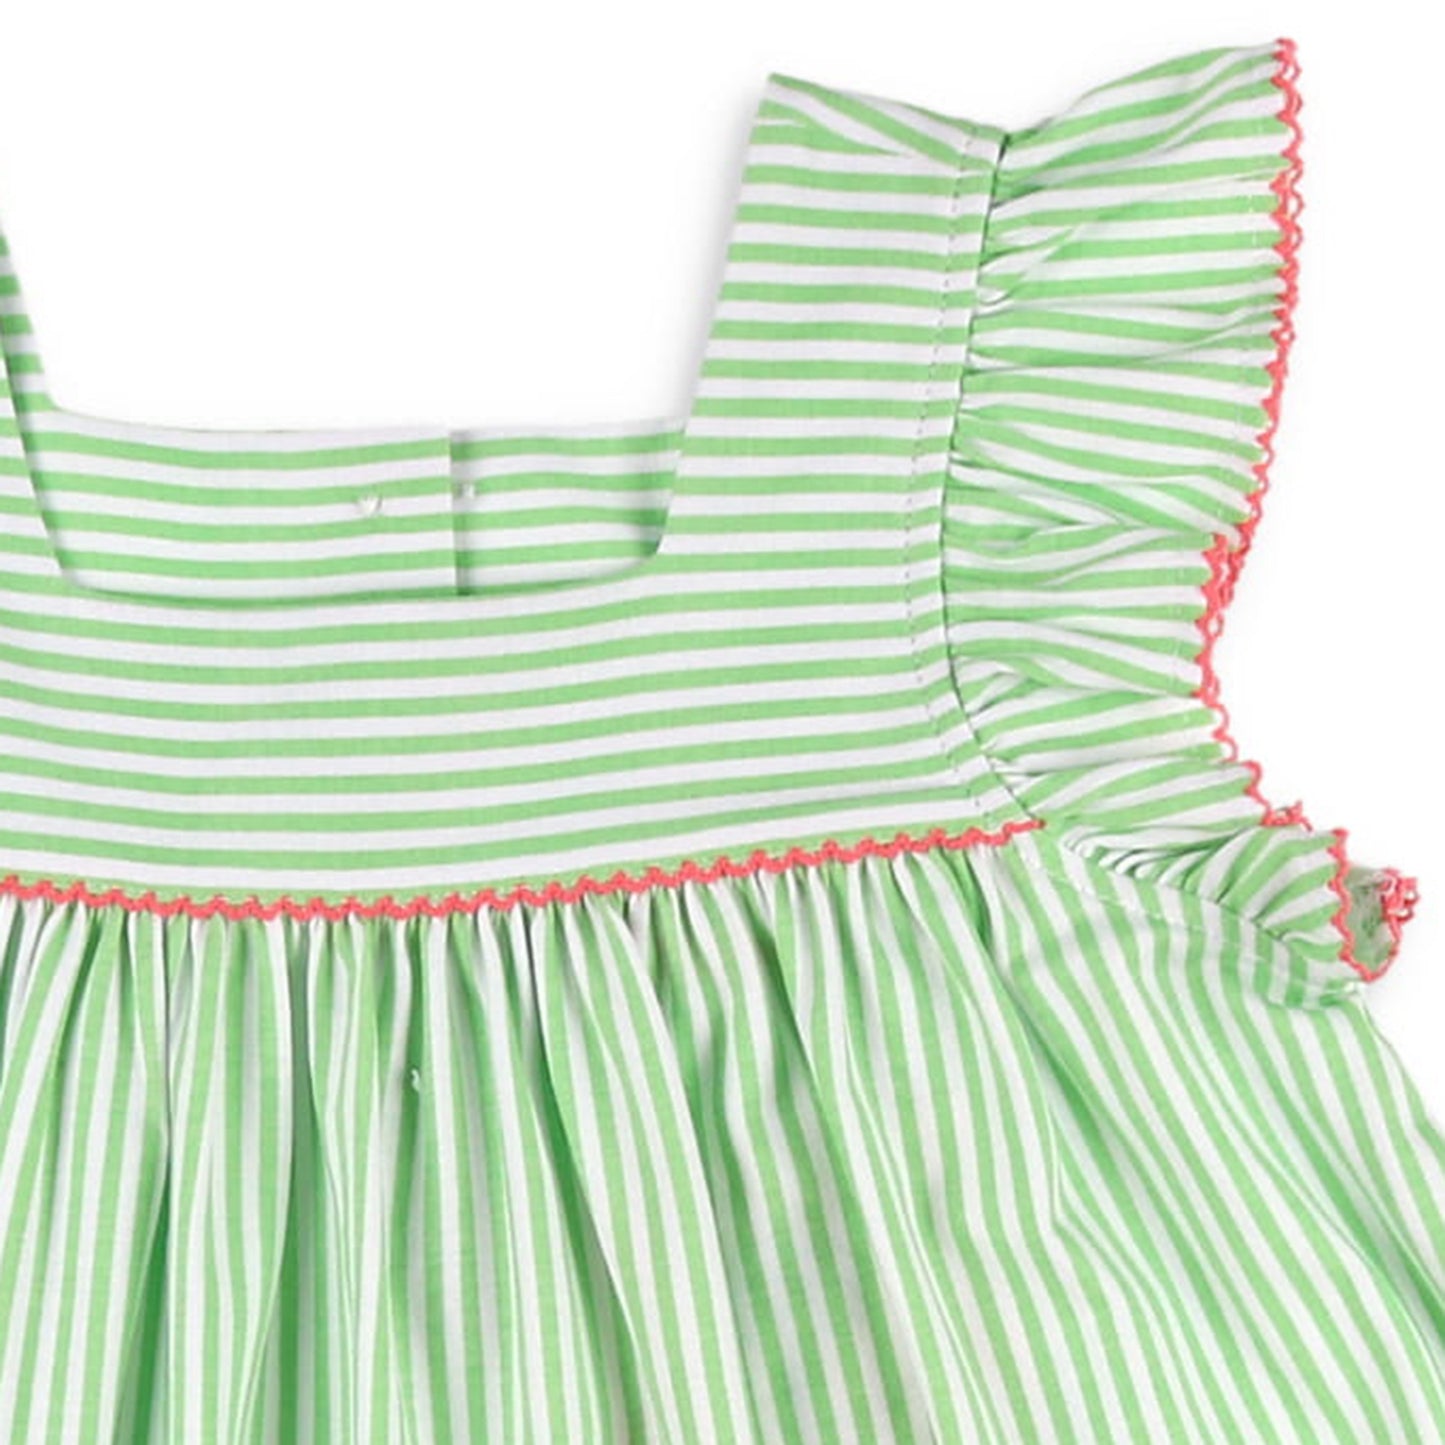 Watermelon Pocket Dress